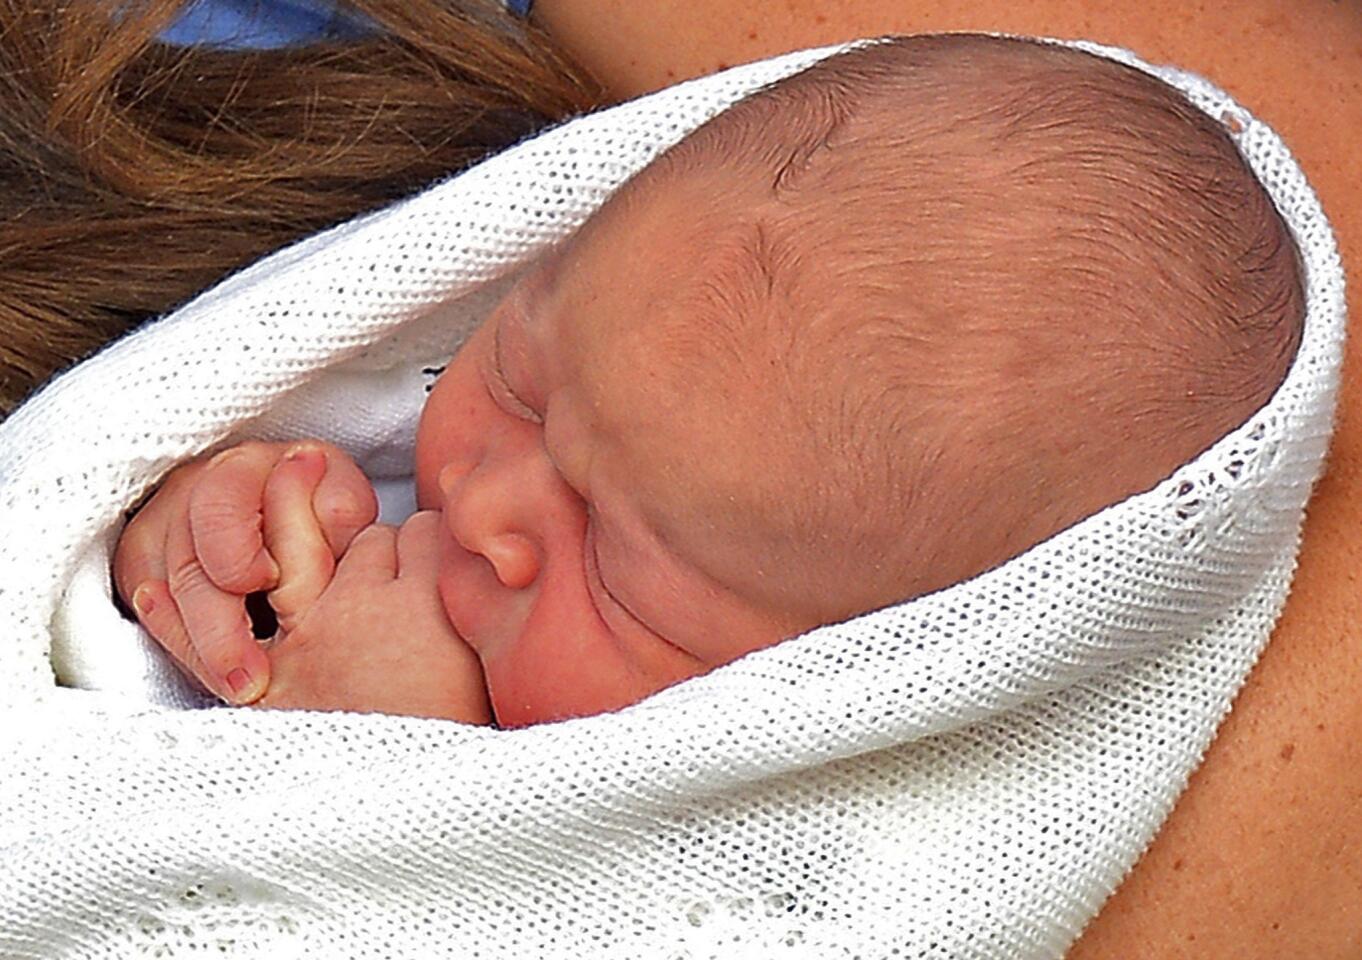 Royal baby 2013: Prince George of Cambridge